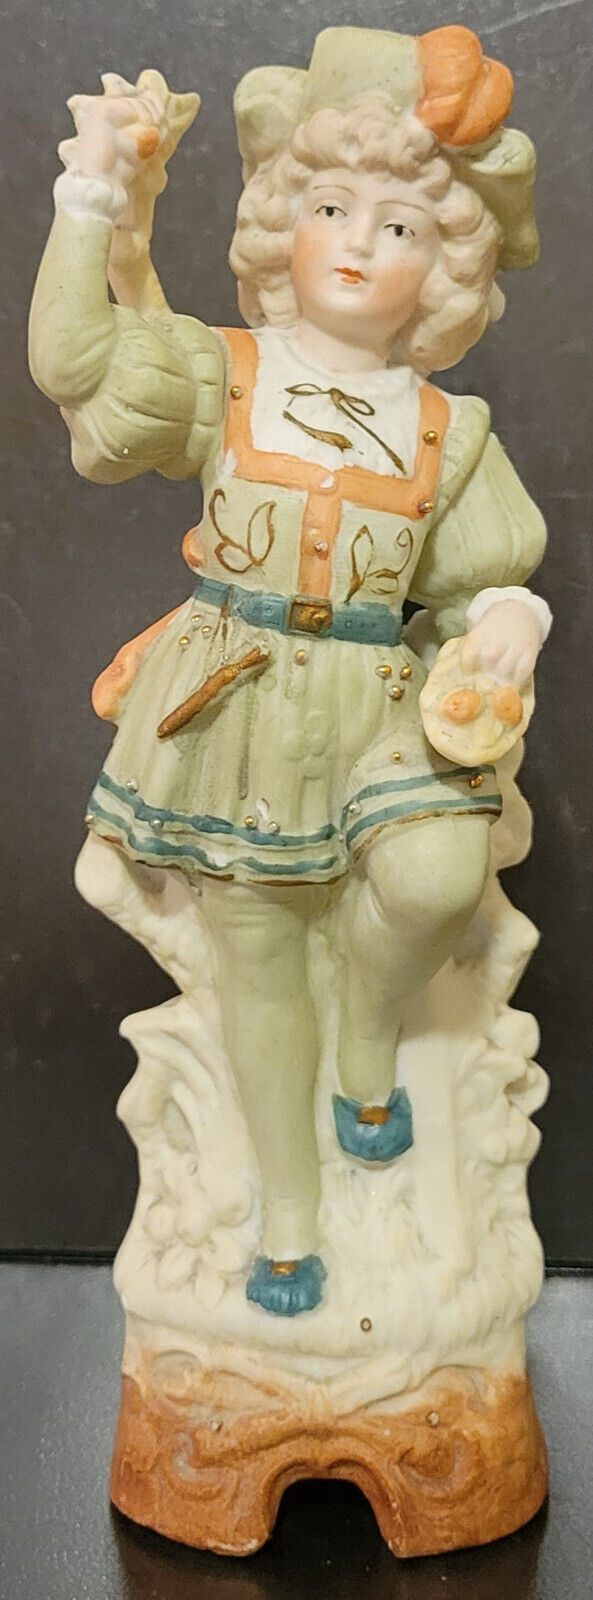 RARE  GEBRUDER HEUBACH ~ Bisque Porcelain GIRL FIGURINE ~ Antique Marked Vintage